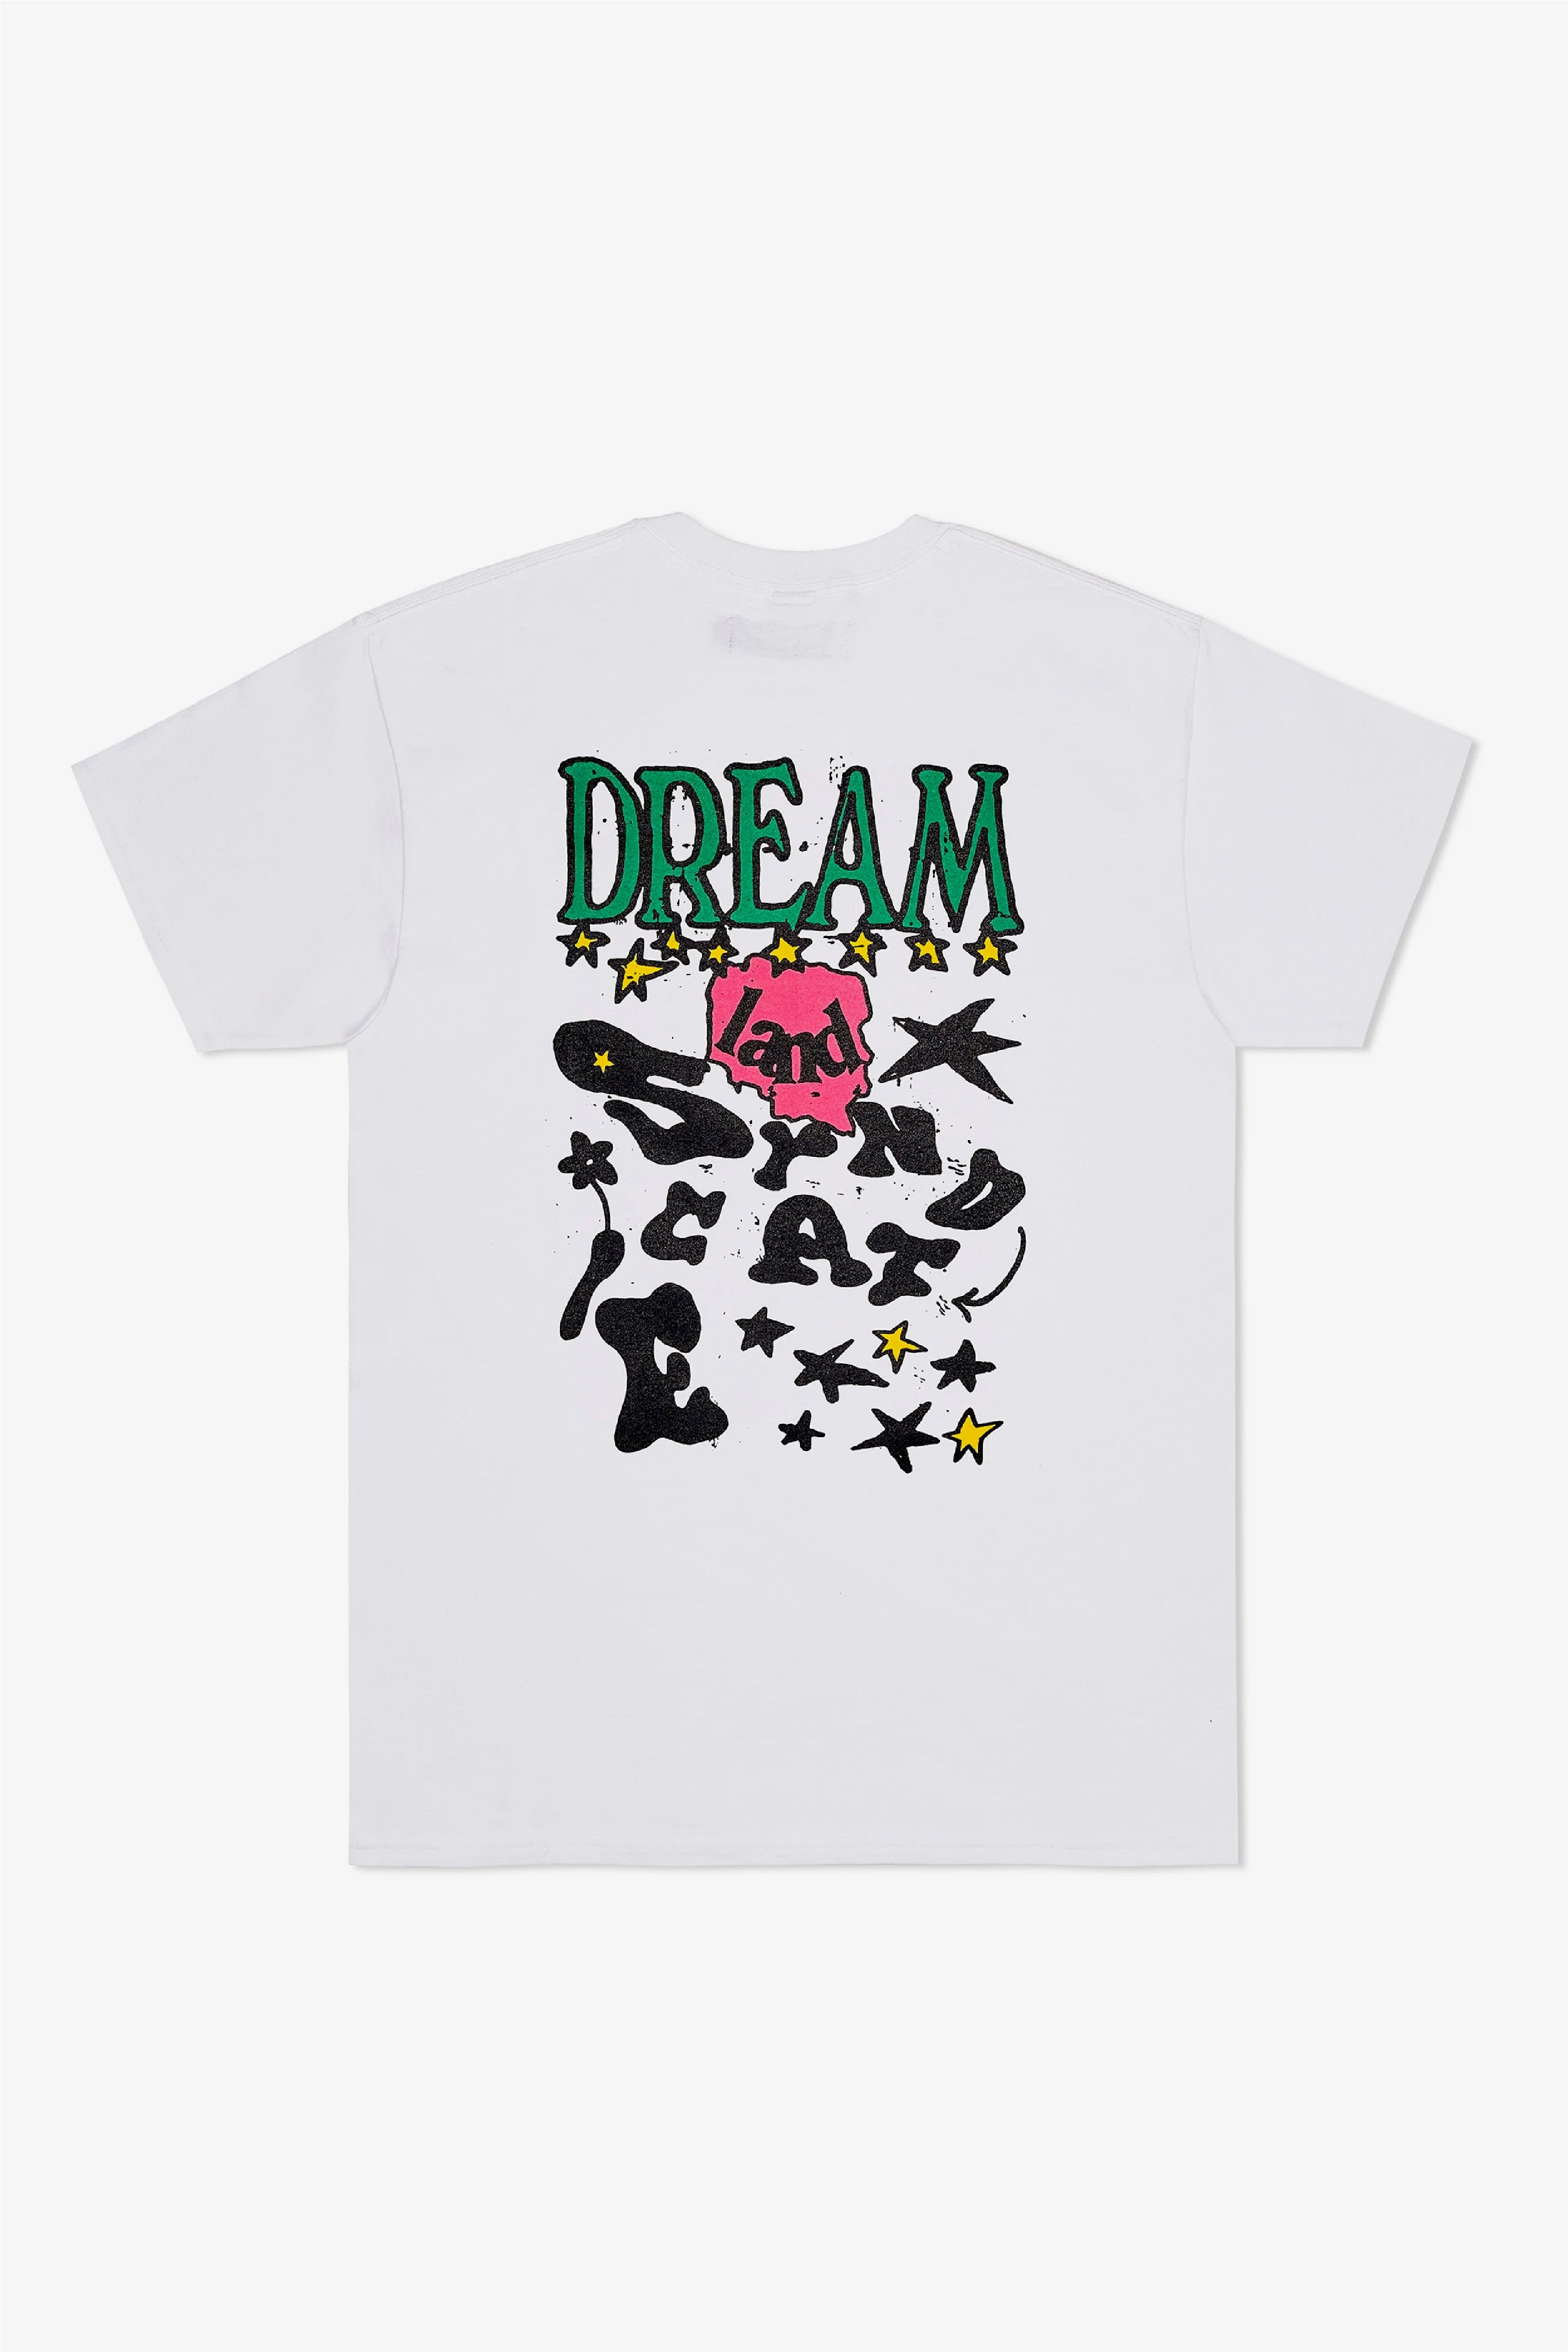 Selectshop FRAME - DREAMLAND SYNDICATE Good Things Collab Eco Tee T-Shirts Dubai